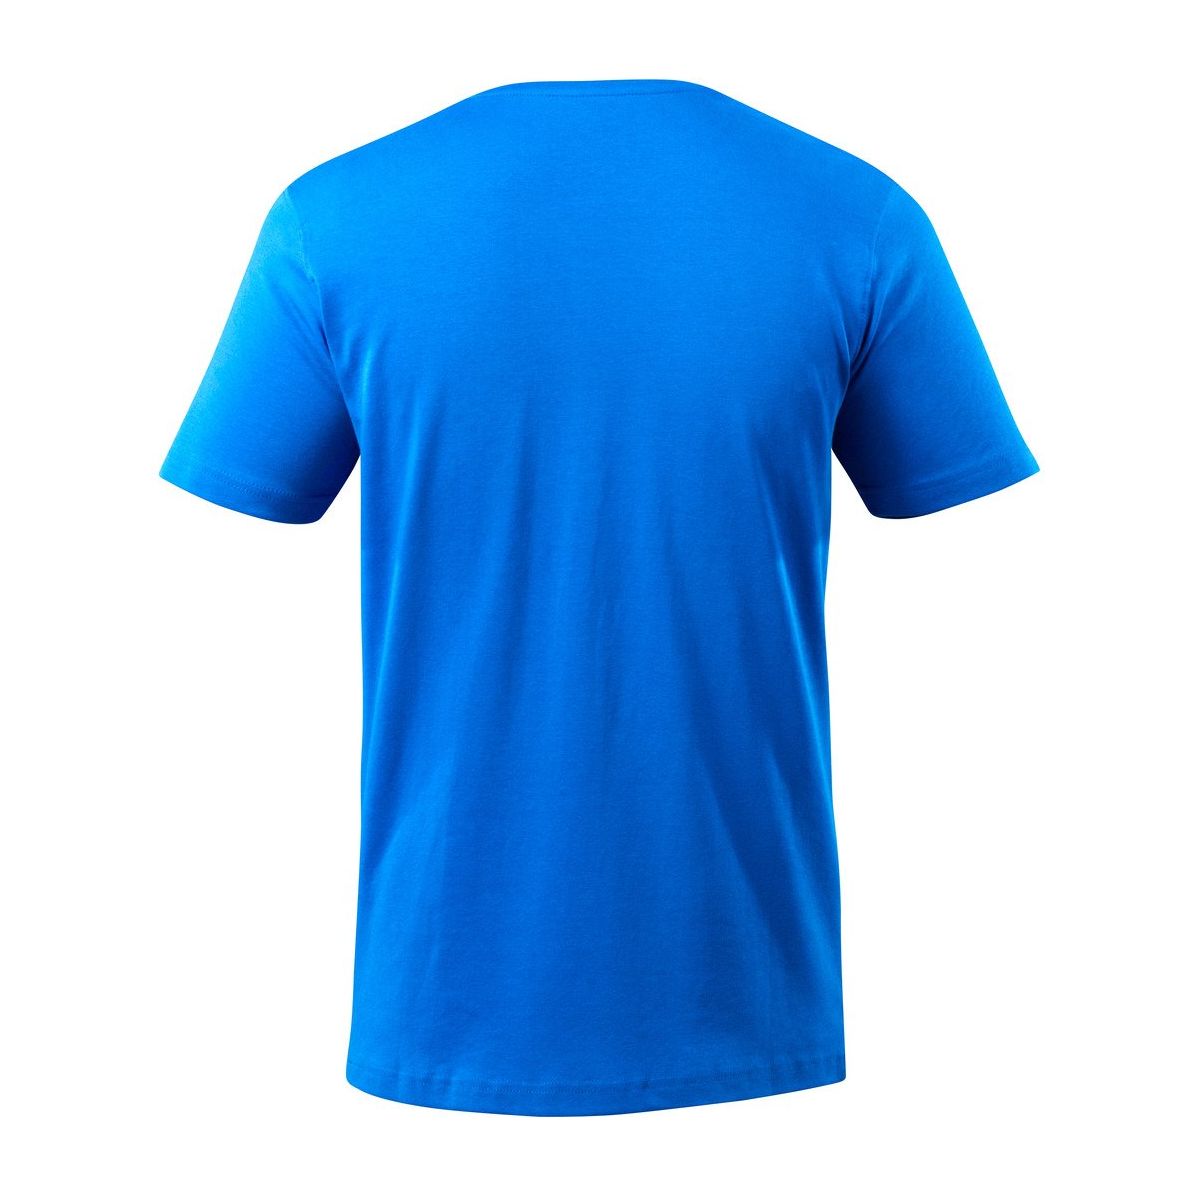 Mascot Vence T-shirt Slim-Fit Azure Blue 51585-967-91 Back